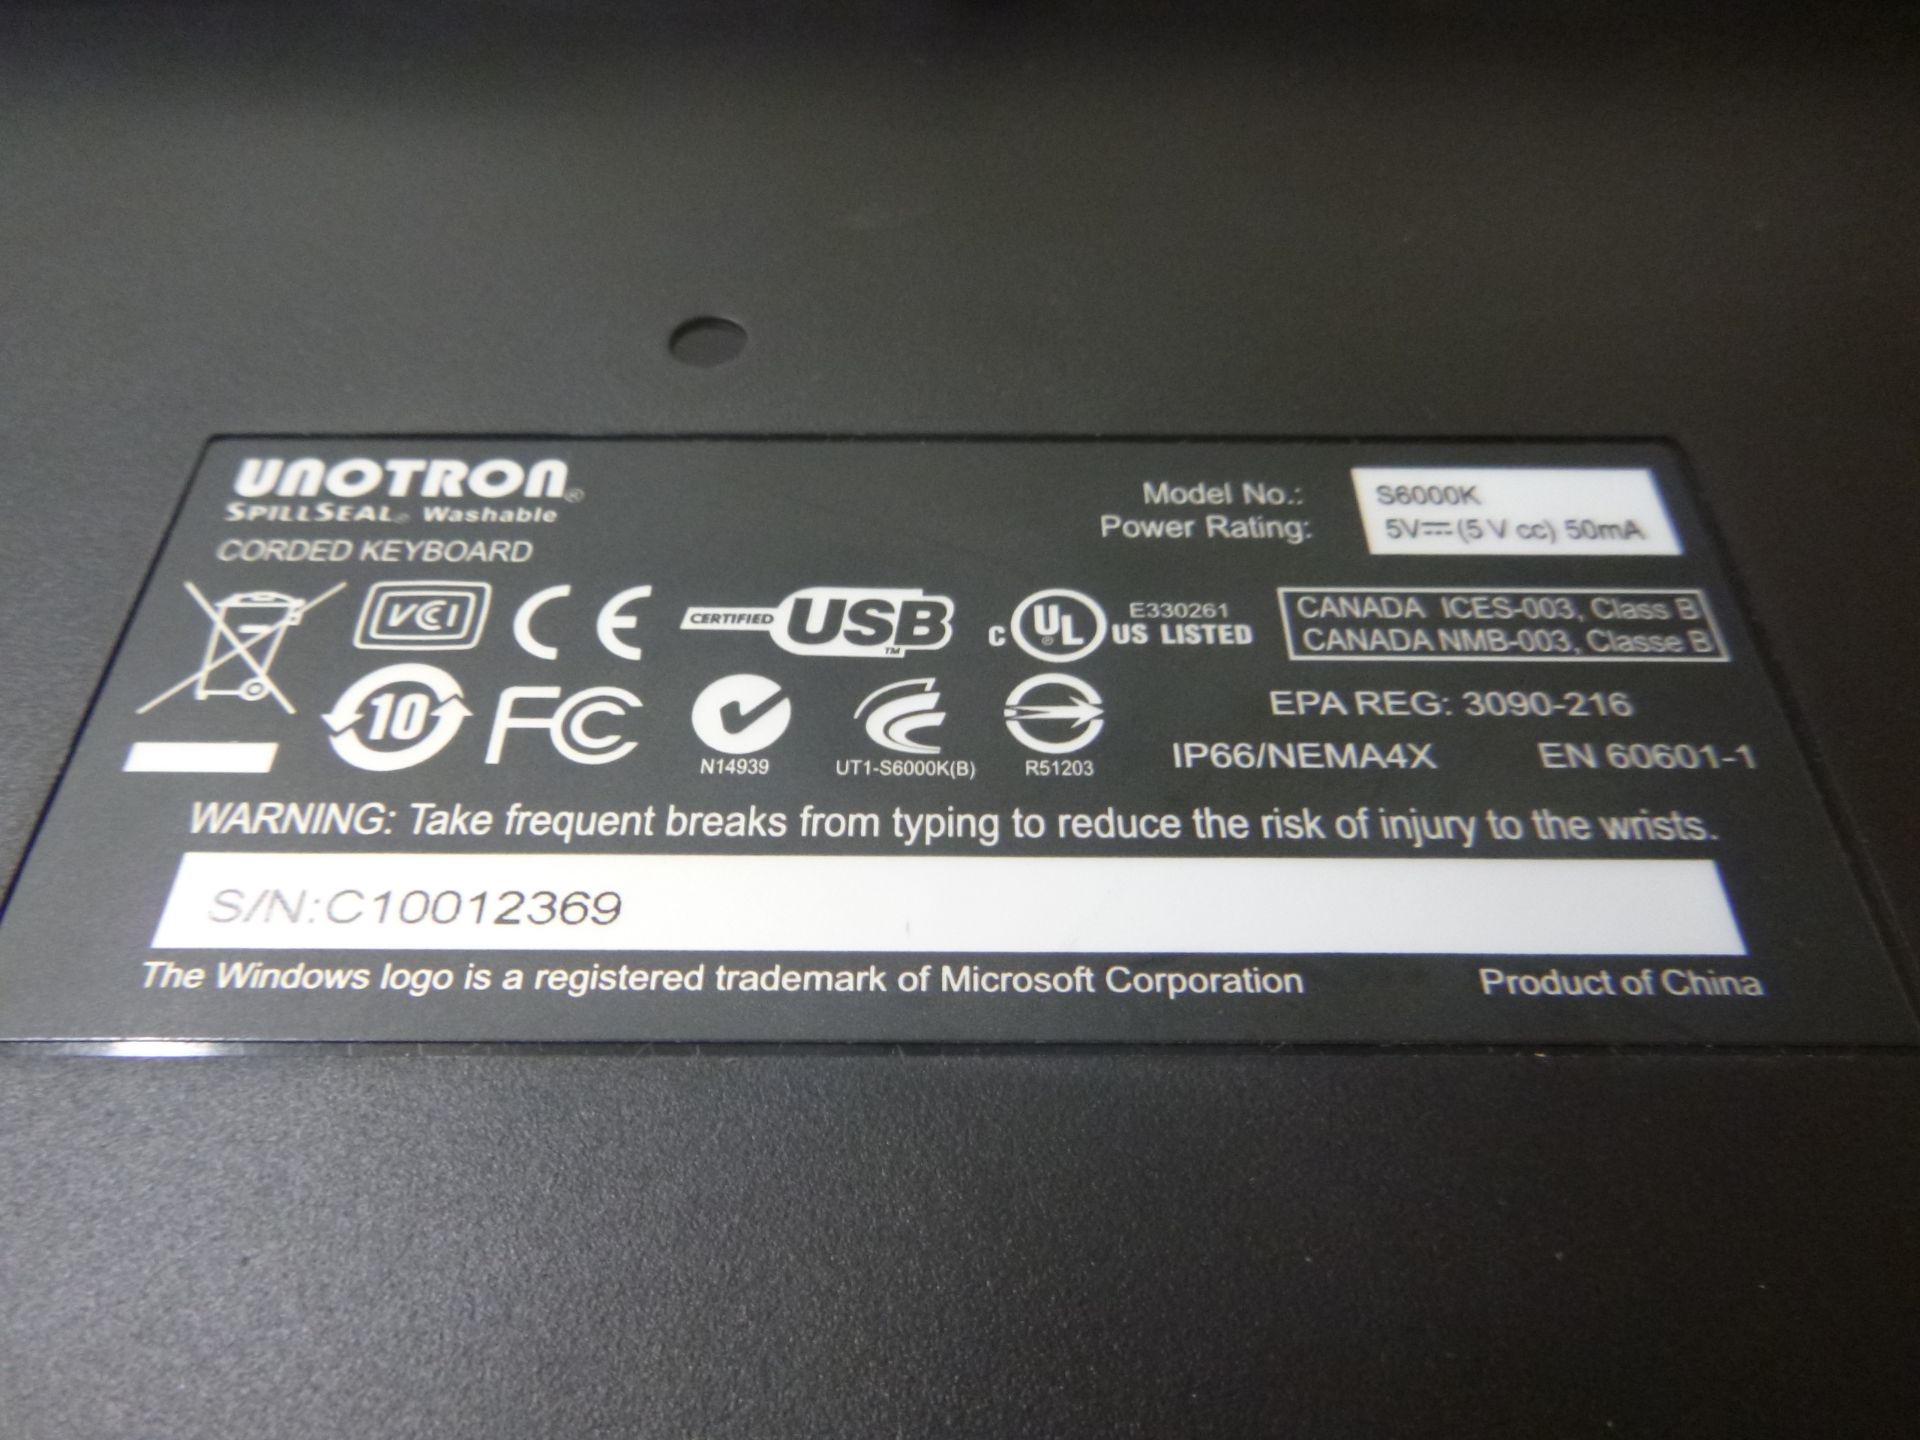 4 X Unotron SpillSeal Washable Corded USB Keyboard. Model S6000K - Image 2 of 2